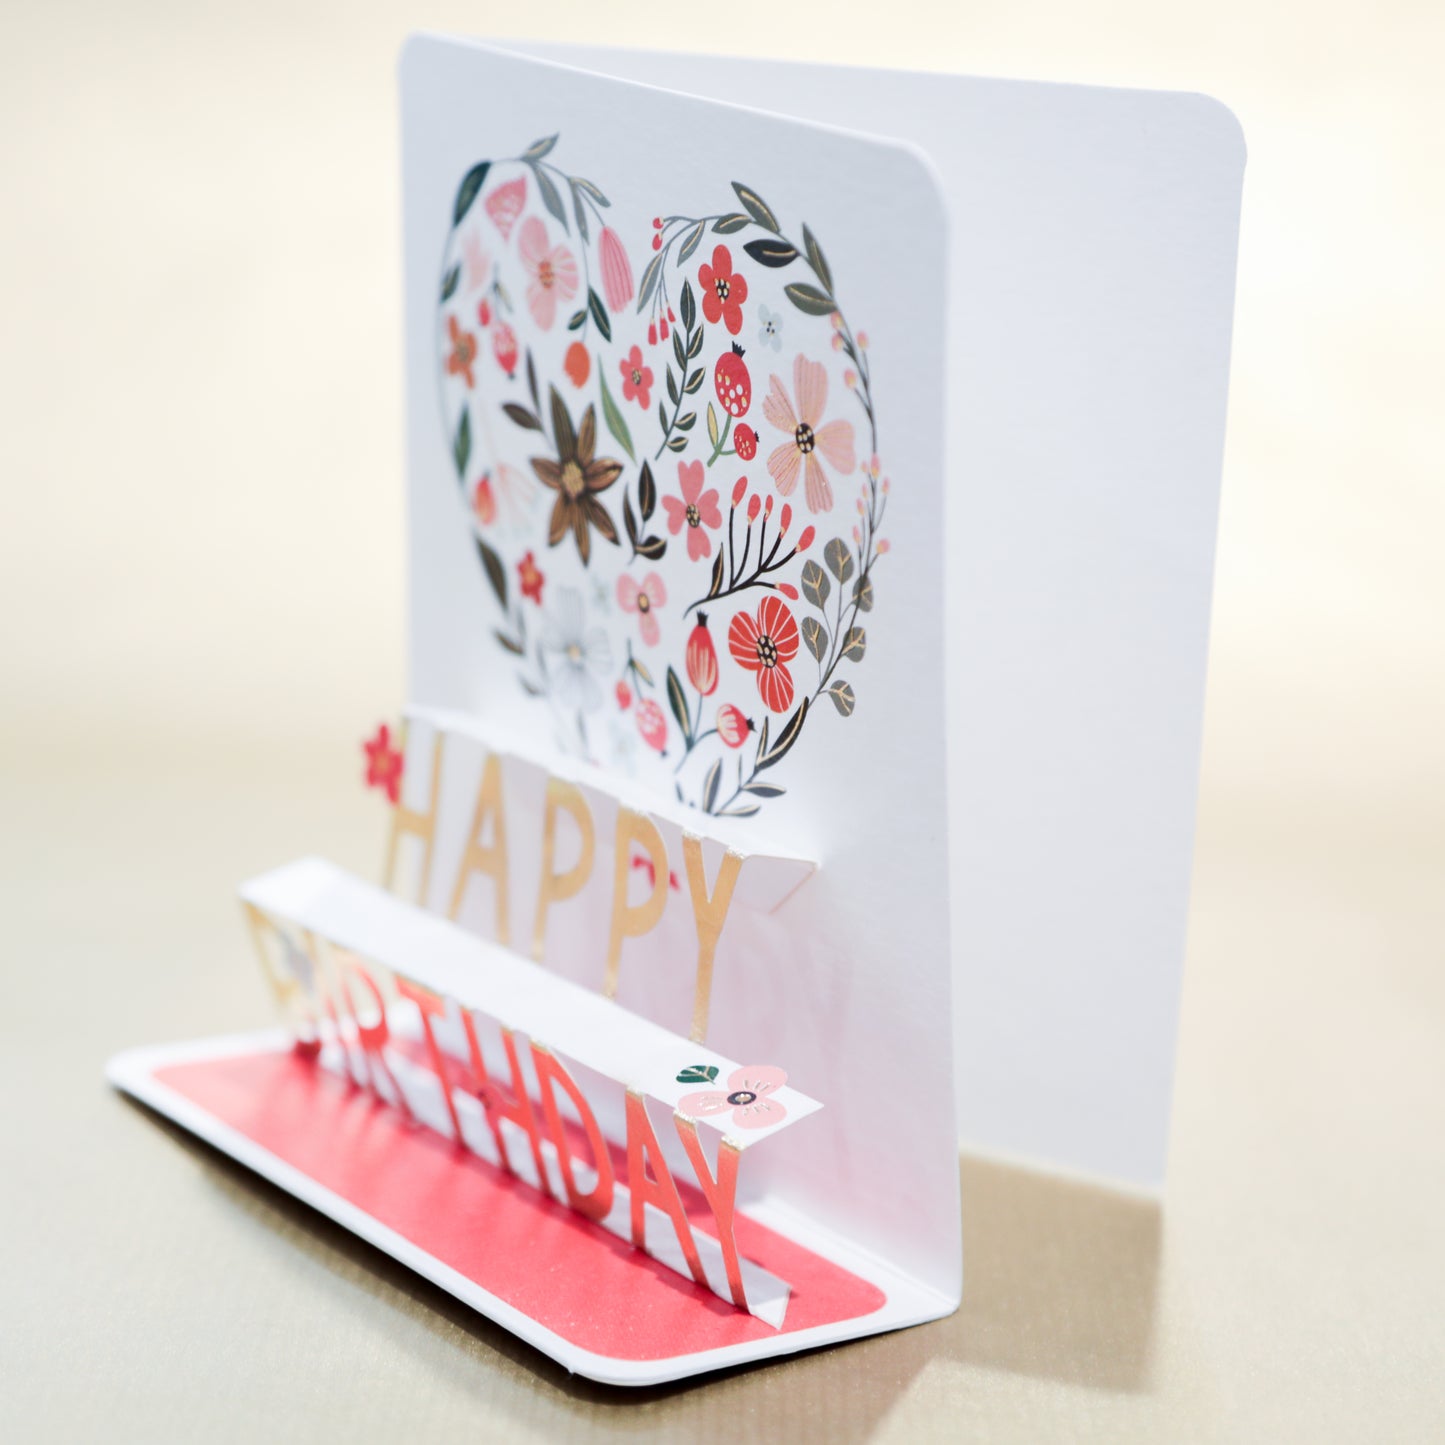 3D Greeting Card - Flower Heart, Happy Birthday